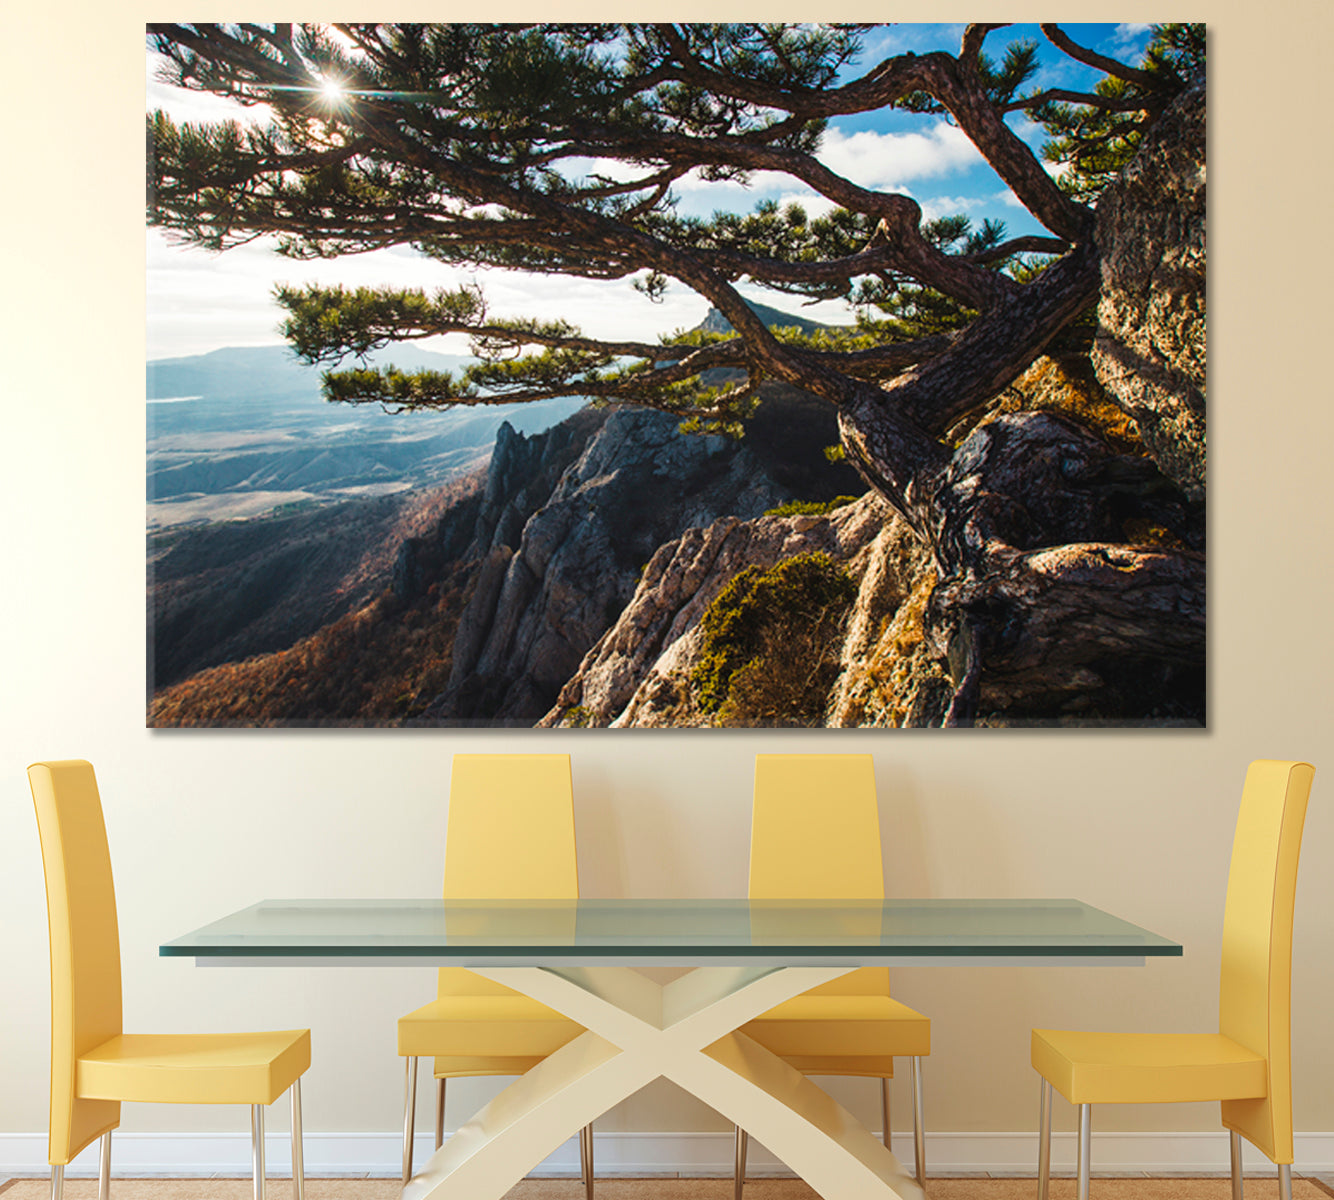 Breathtaking Beautiful Mountains Sunset Big Pine Tree on the Rock Nature Wall Canvas Print Artesty 1 panel 24" x 16" 